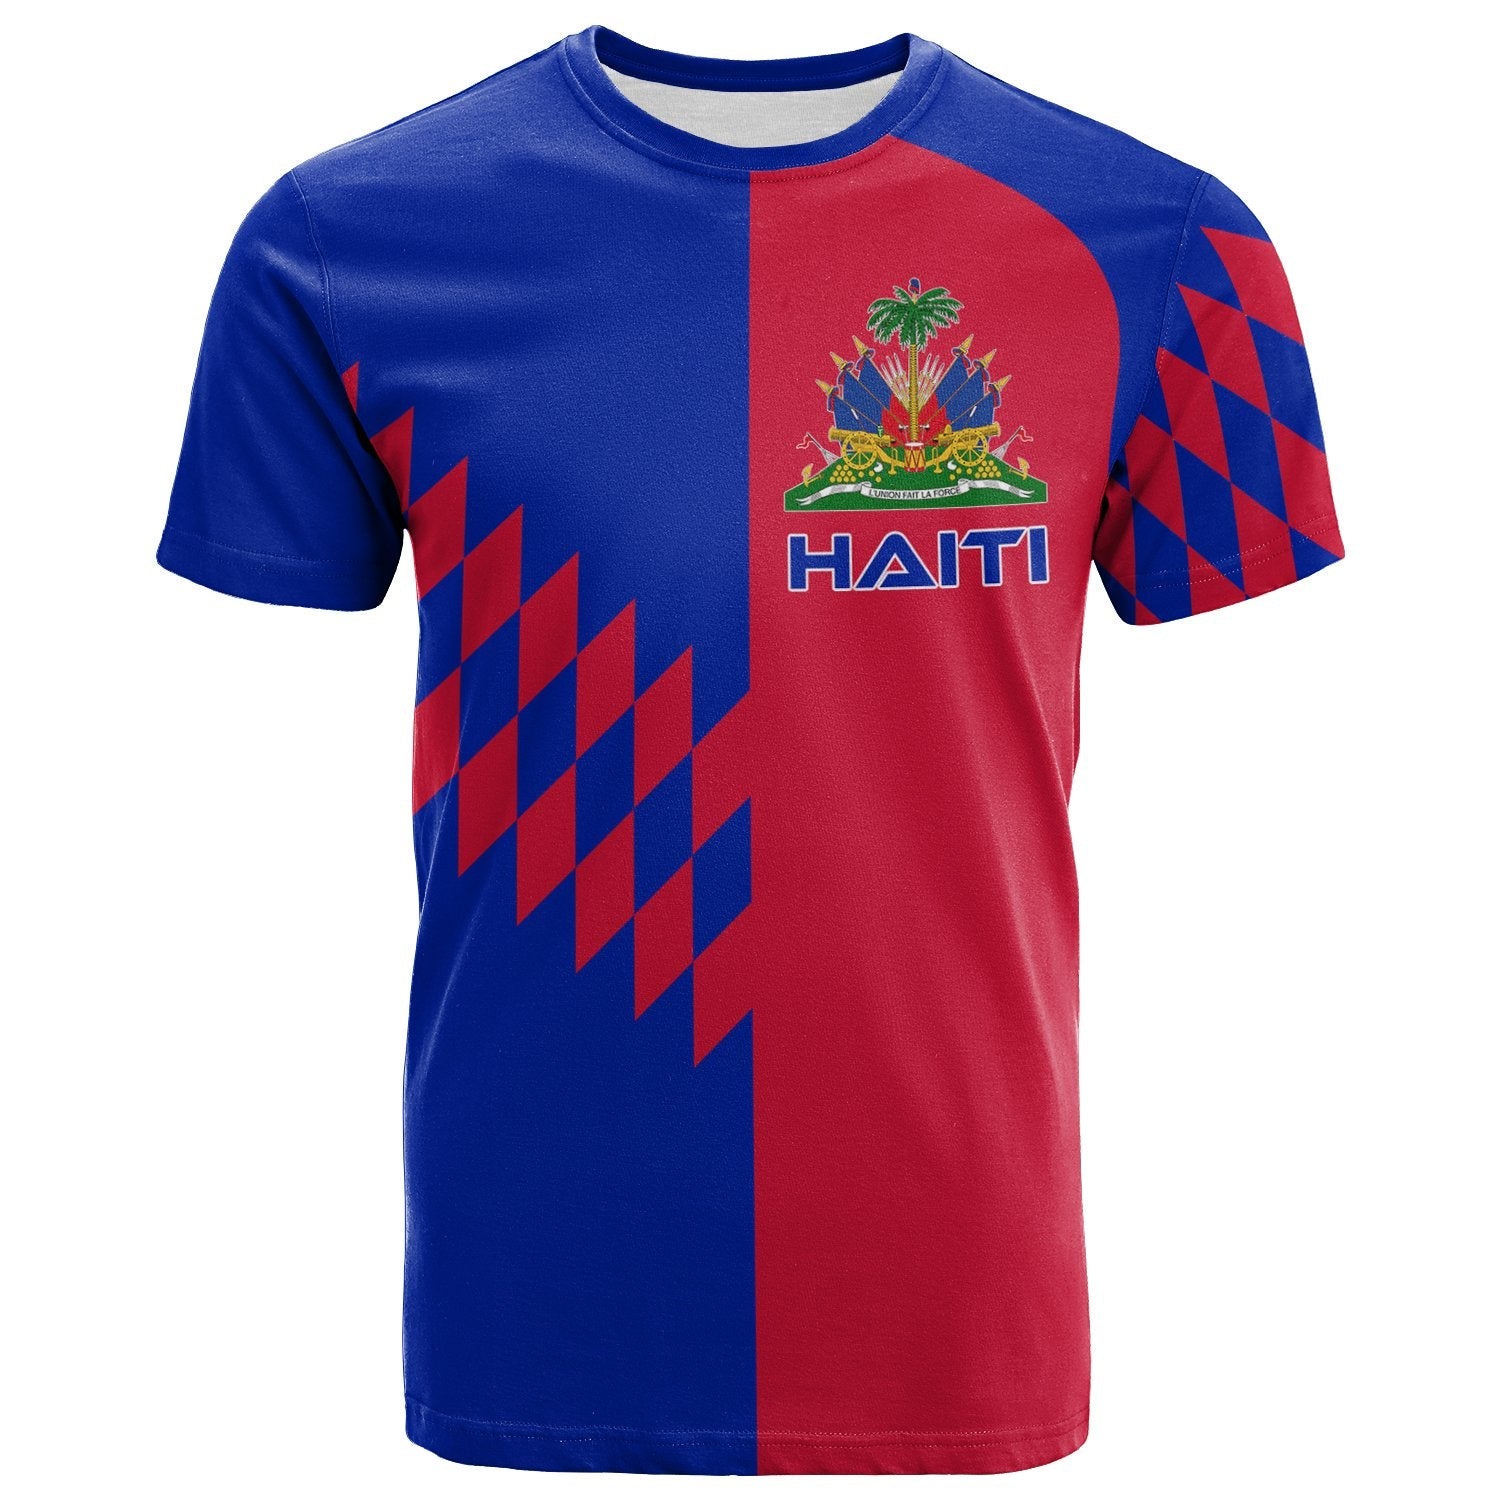 haiti-t-shirt-symmetry-style